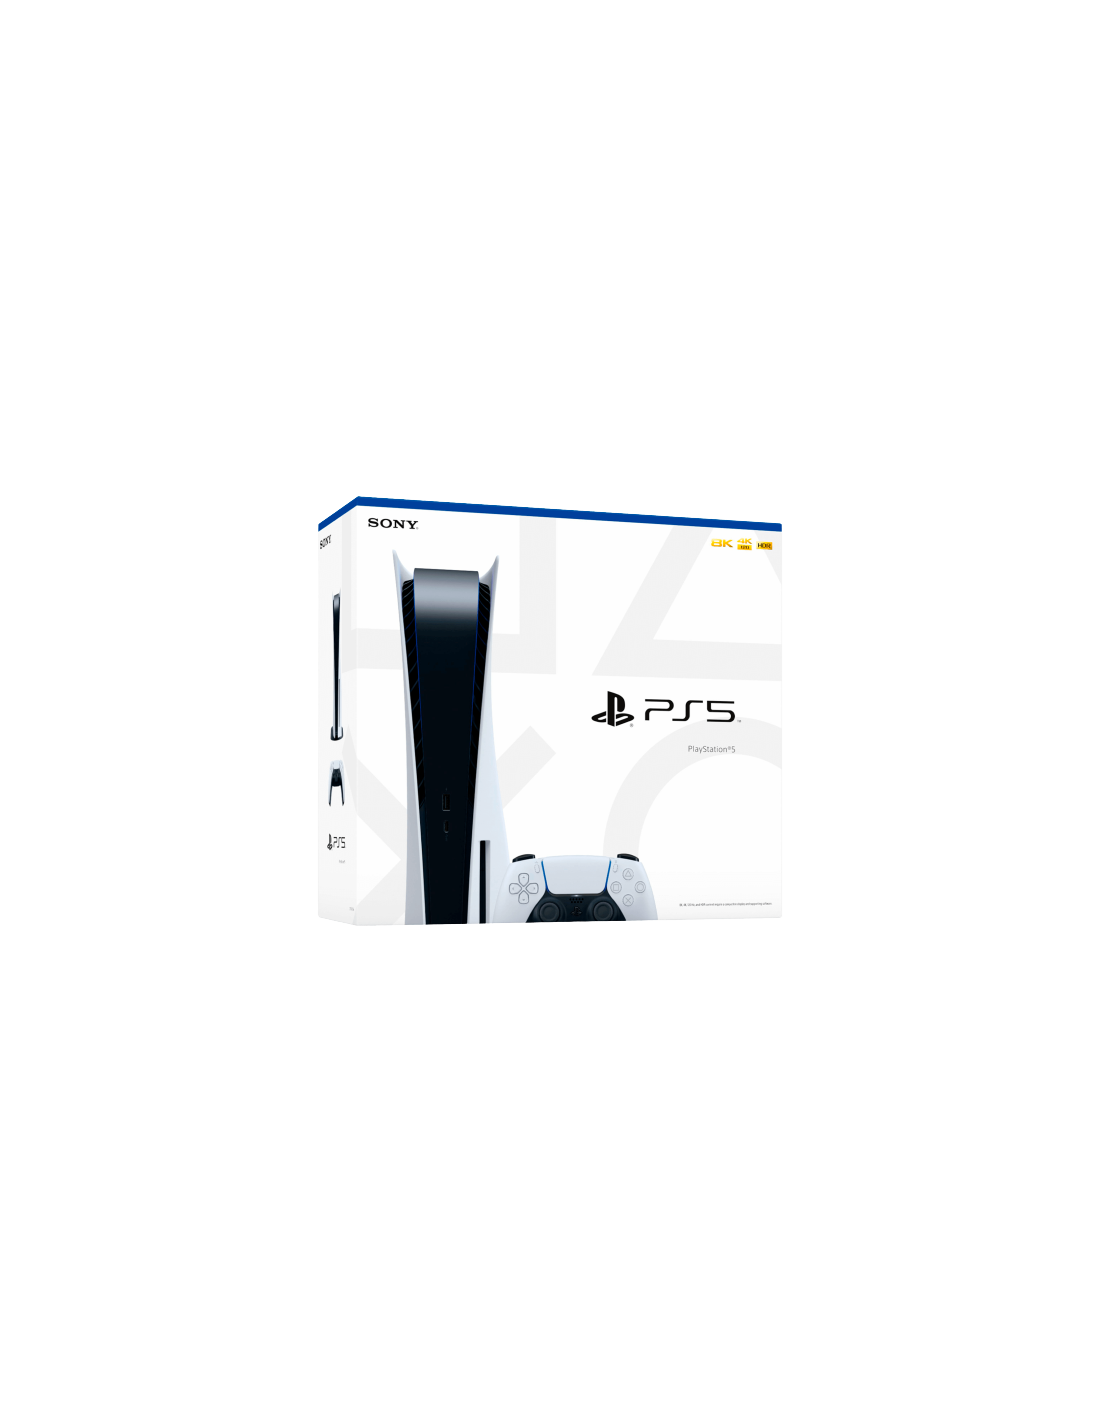 Console Playstation 5 Mídia Física PS5 - Assistec Eletrônicos